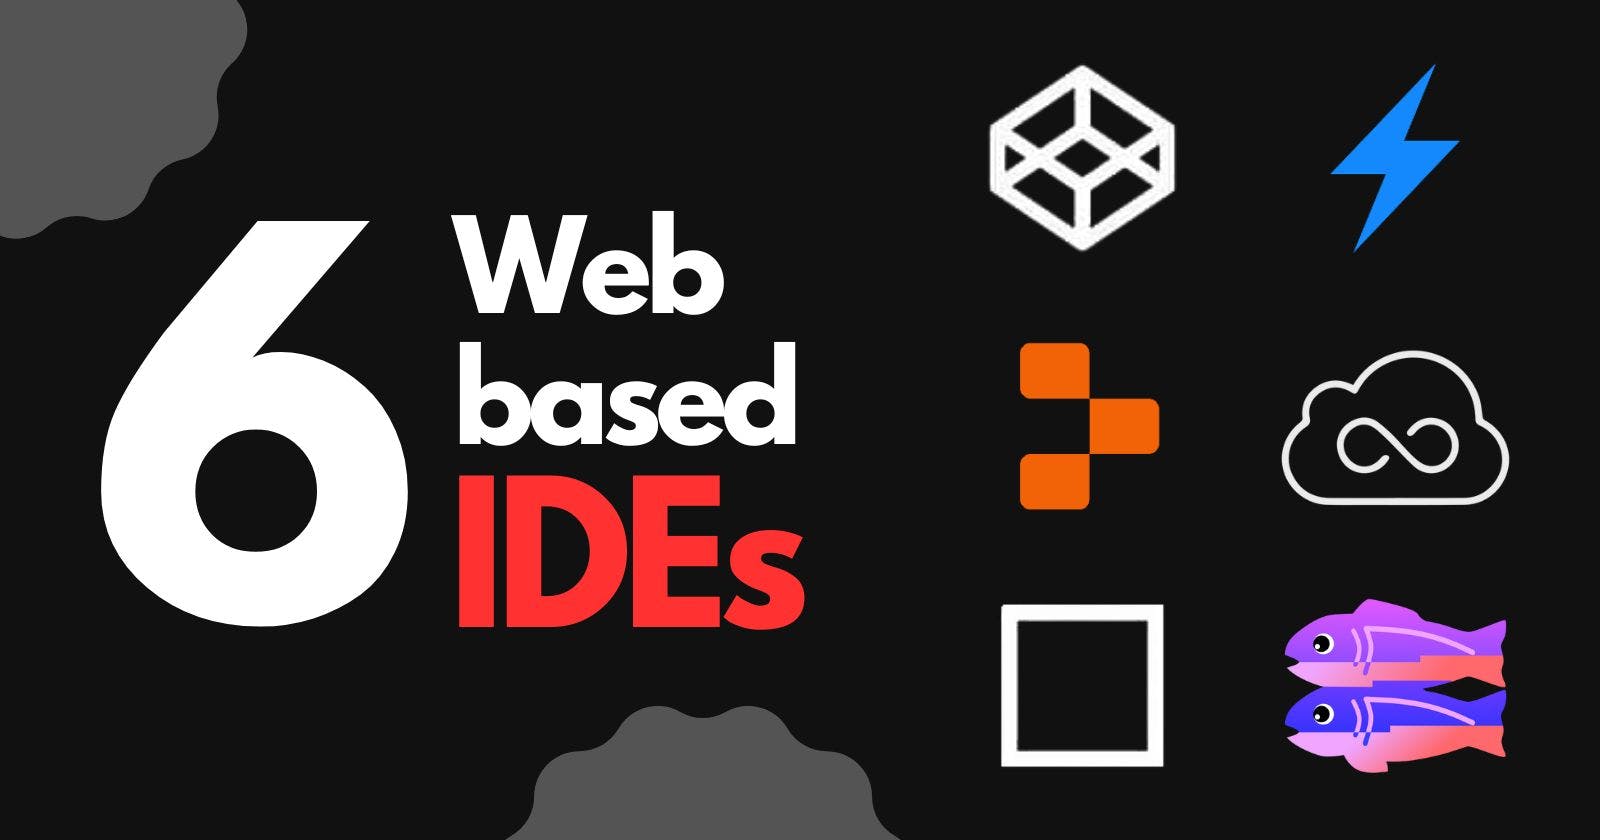 6 Web based IDEs for Web Development 🧑🏼‍💻